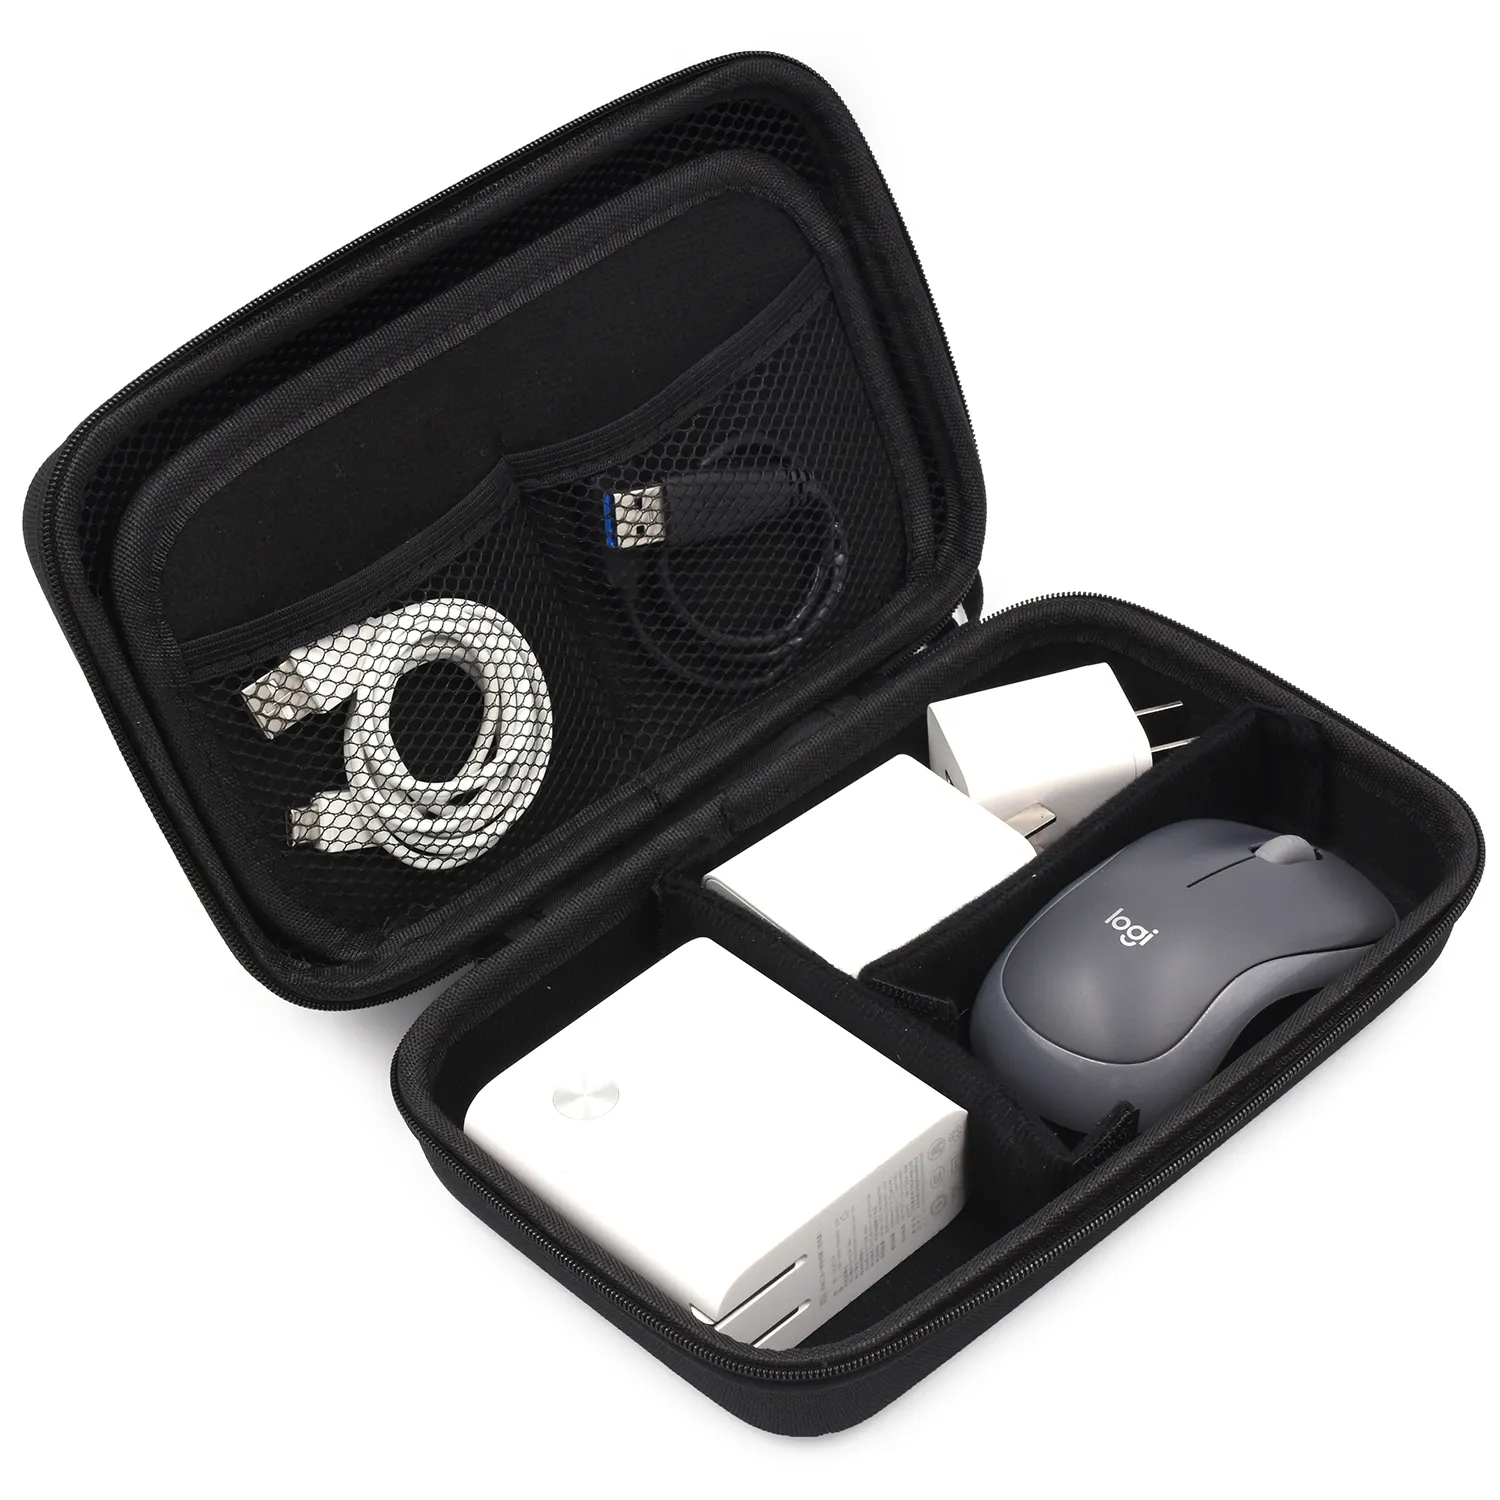 Kustom tas kantong penyimpanan Organiser Digital Travel ritsleting Neoprene lembut untuk kabel USB Flash Disk HDD